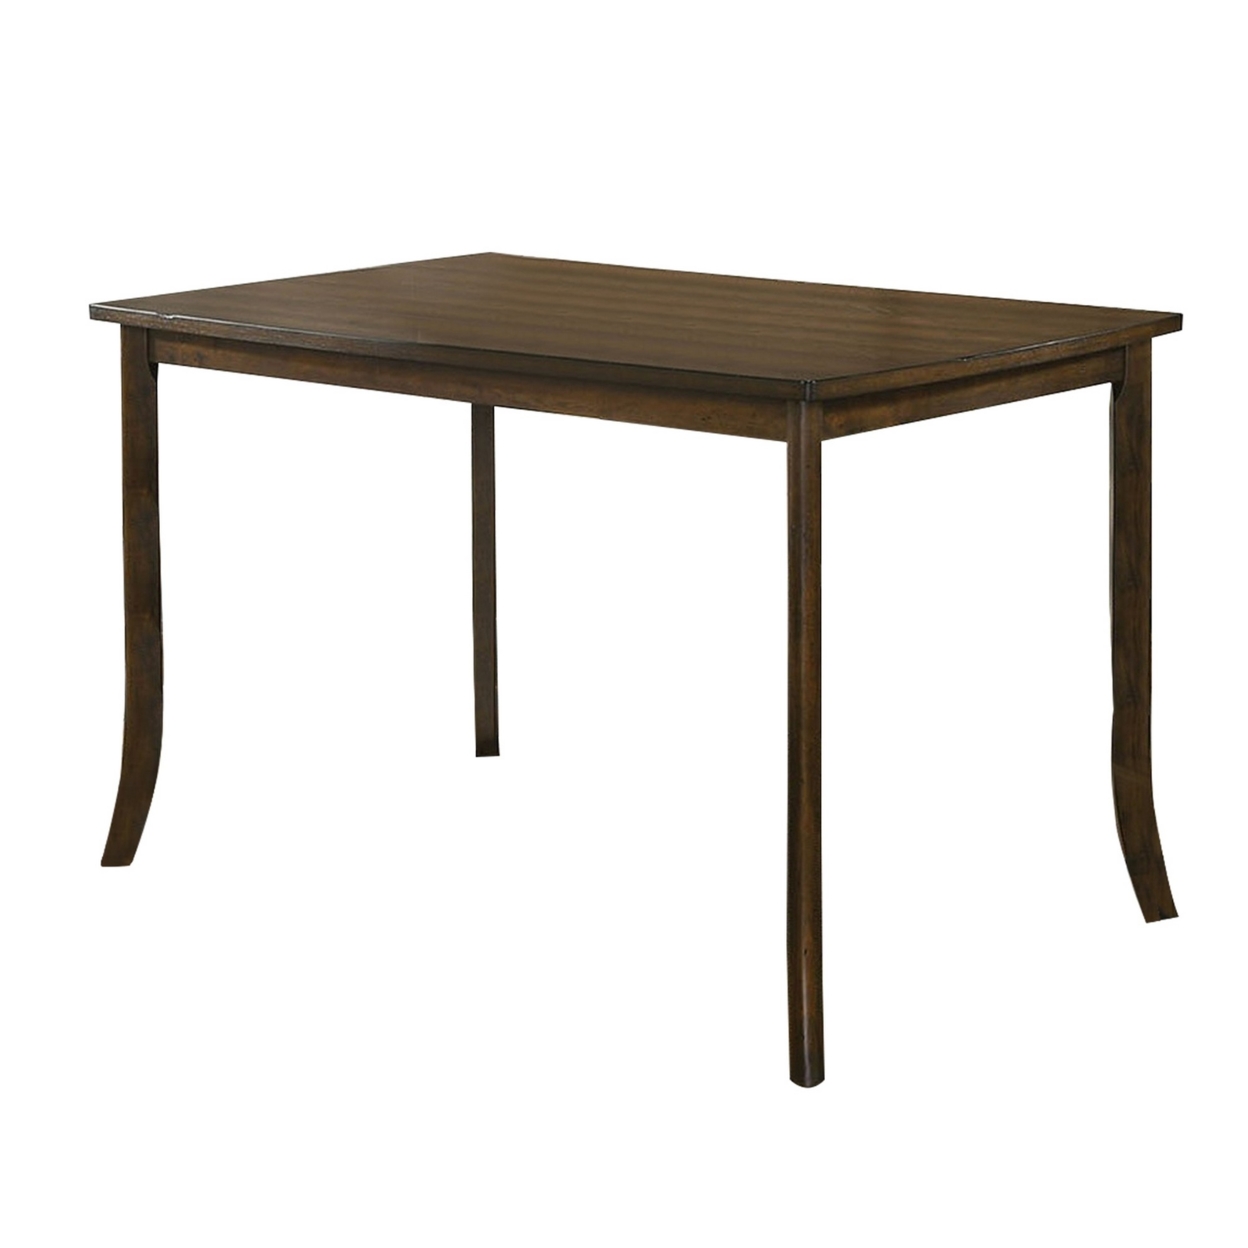 Rectangular Wooden Top Counter Height Table With Saber Legs, Brown- Saltoro Sherpi